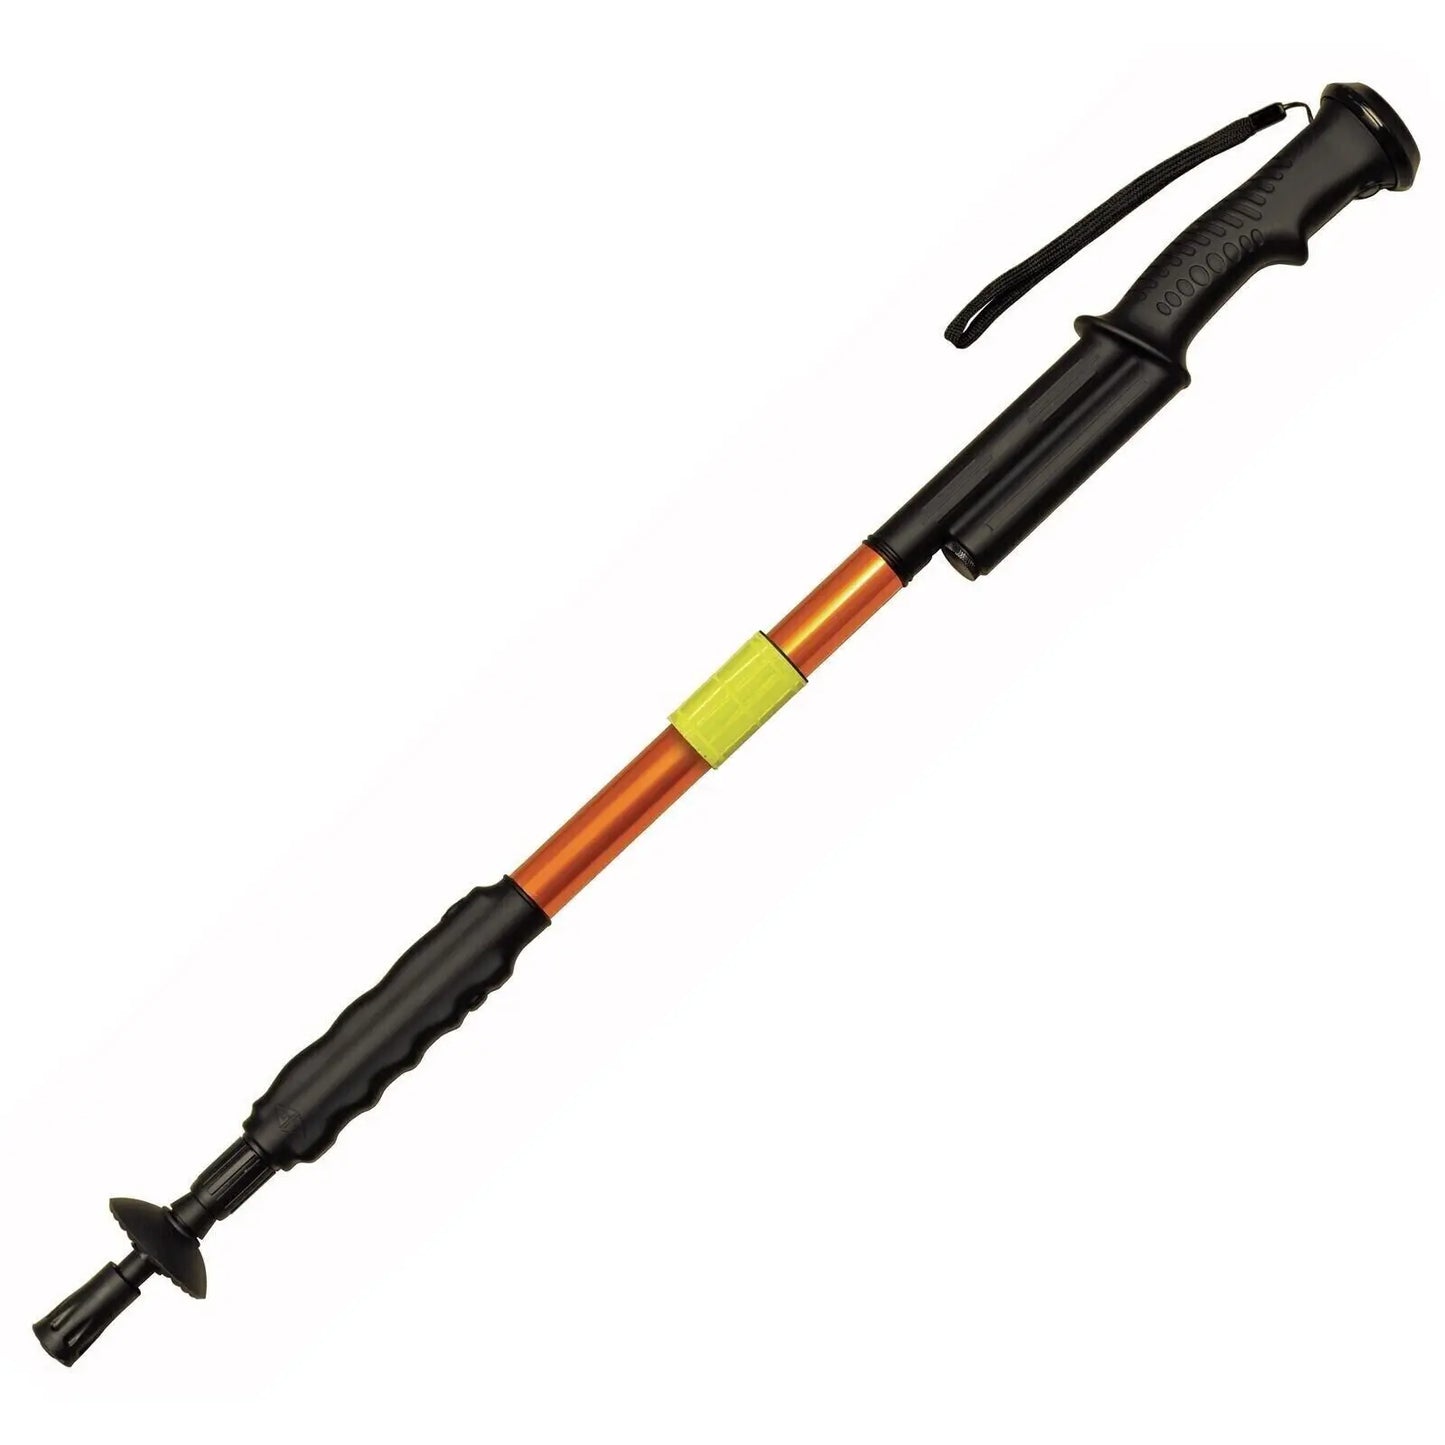 ZAP Hike 'n Strike Stun Gun Walking Hiking Stick with Flashlight - Smart Pulse Safety